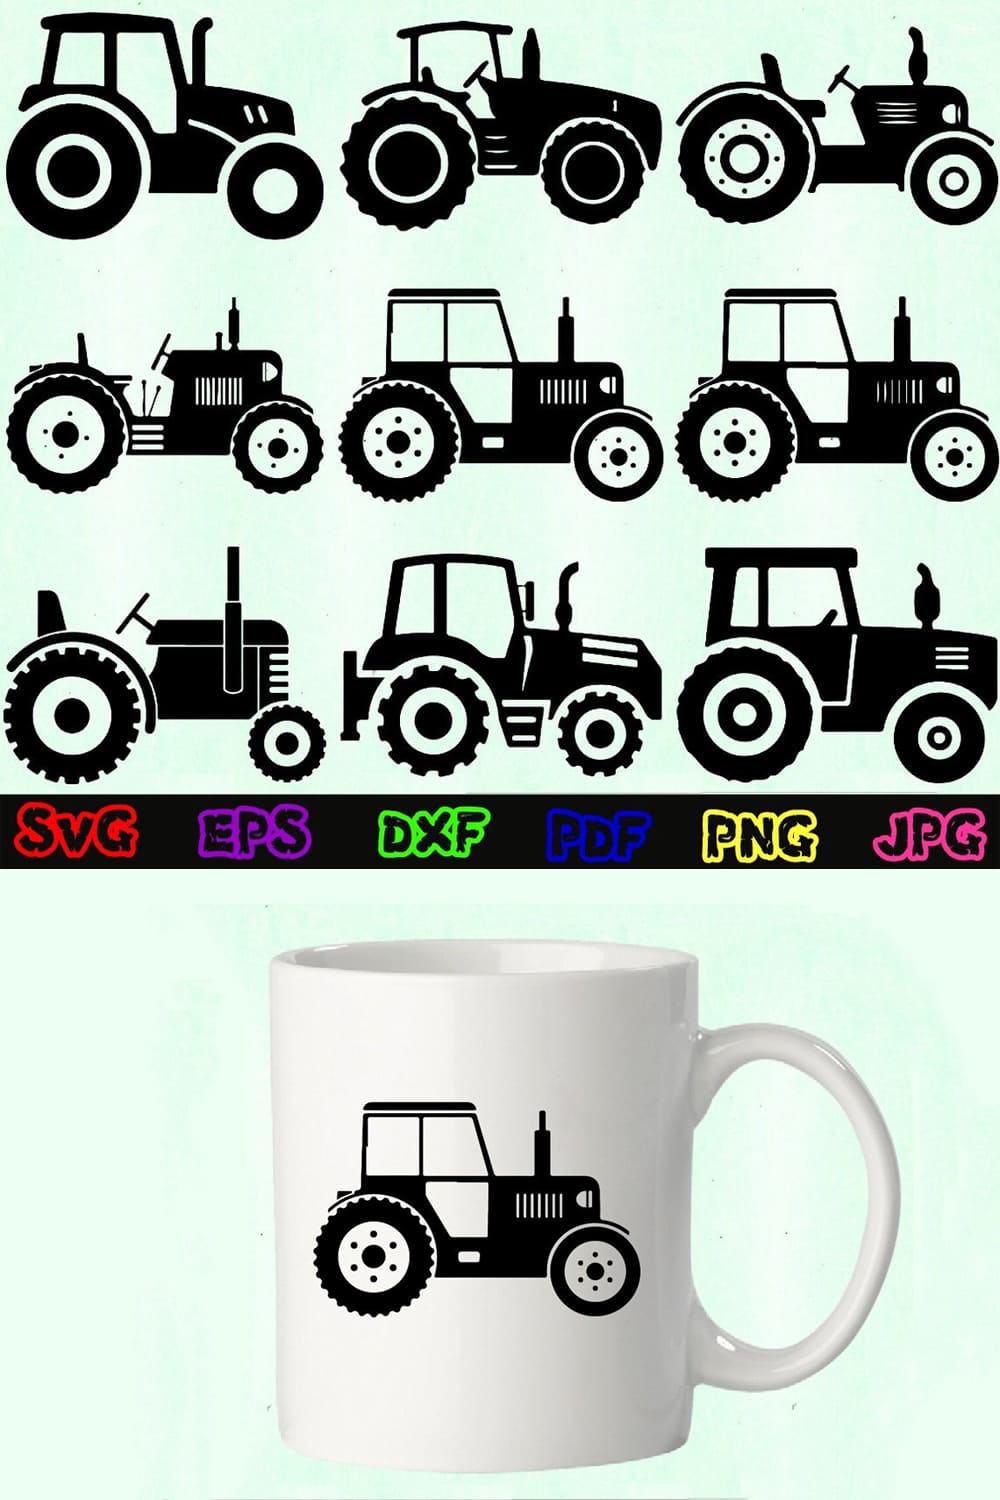 Tractor SVG pinterest image.